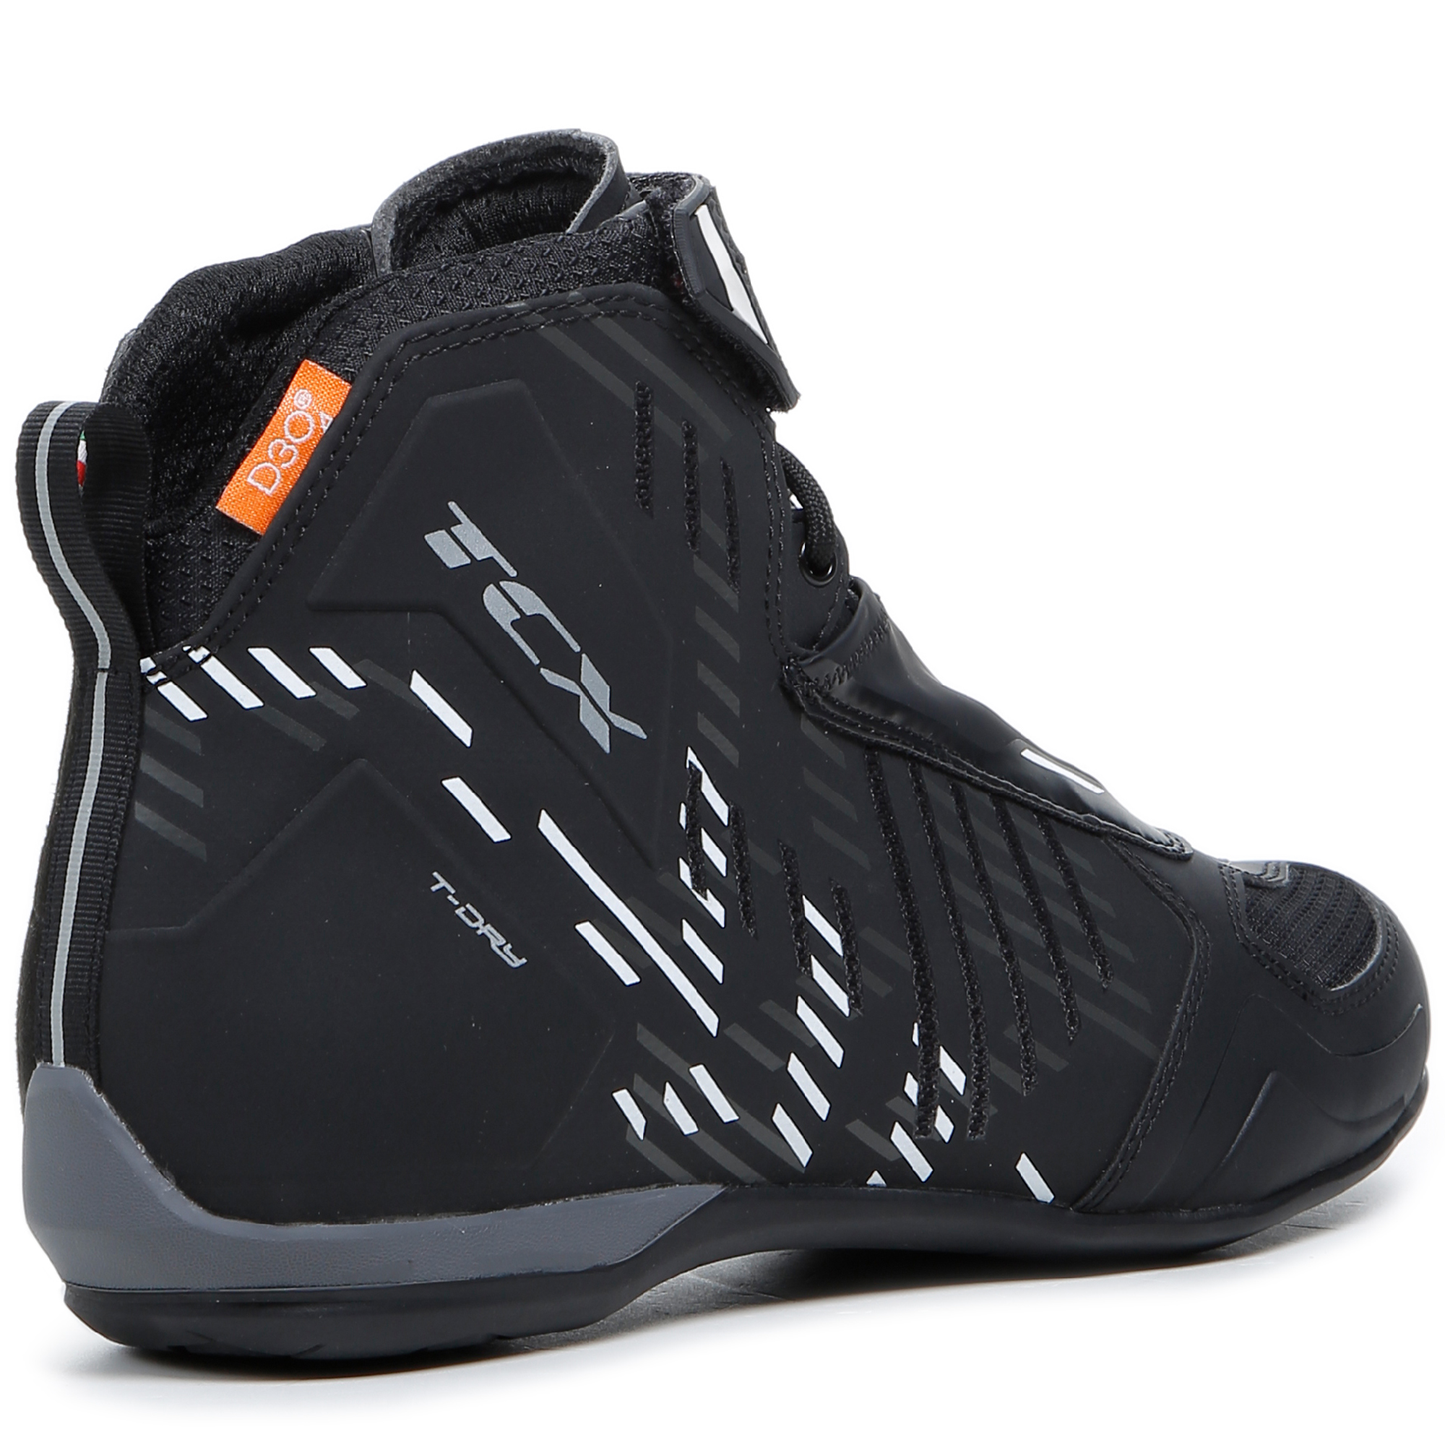 TCX R04d Waterproof Boots - Black/White